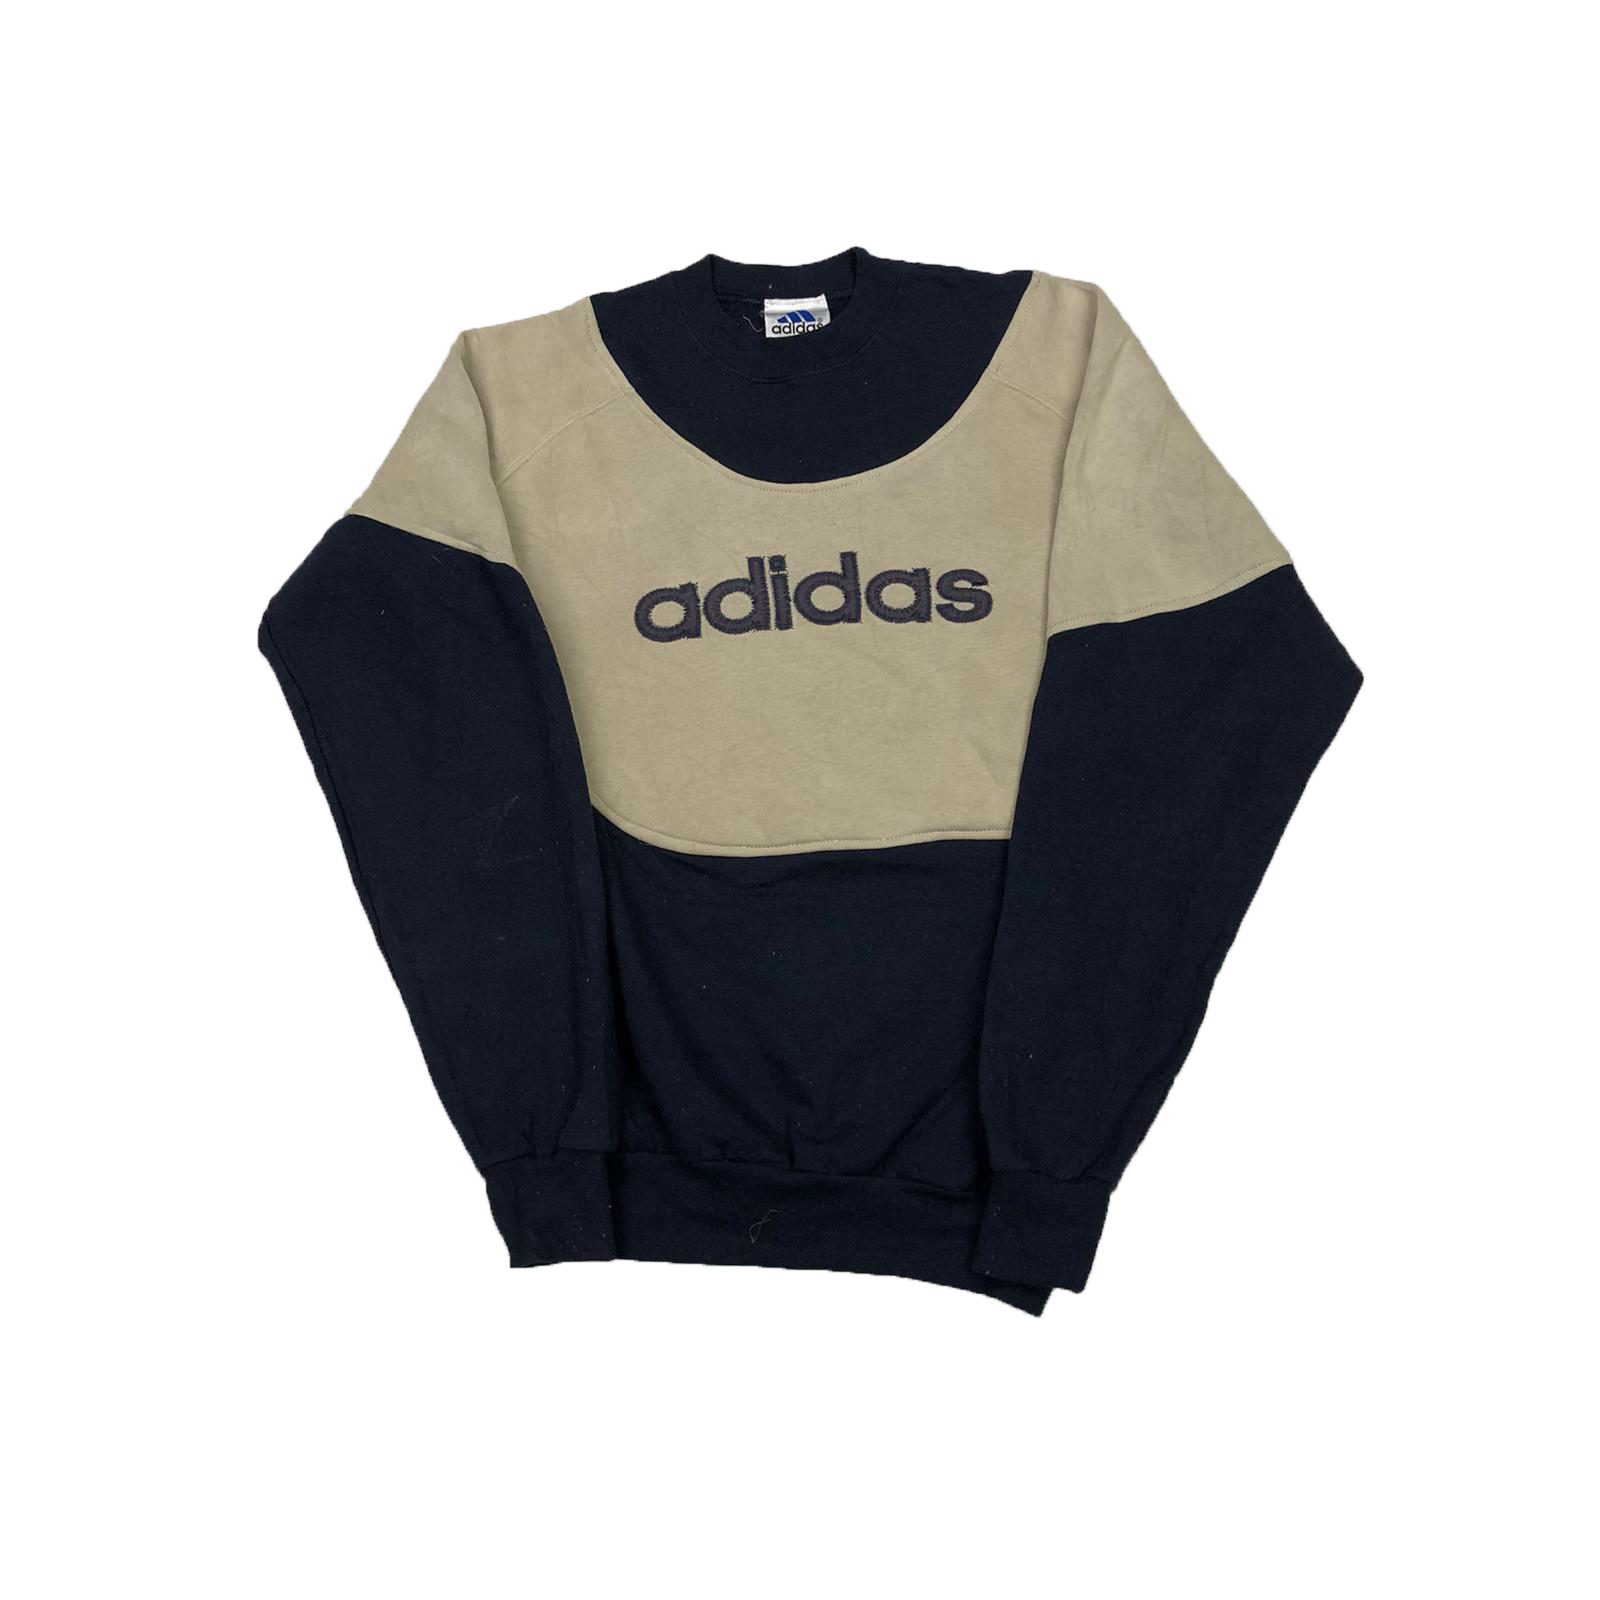 Reworked Adidas sweatshirt